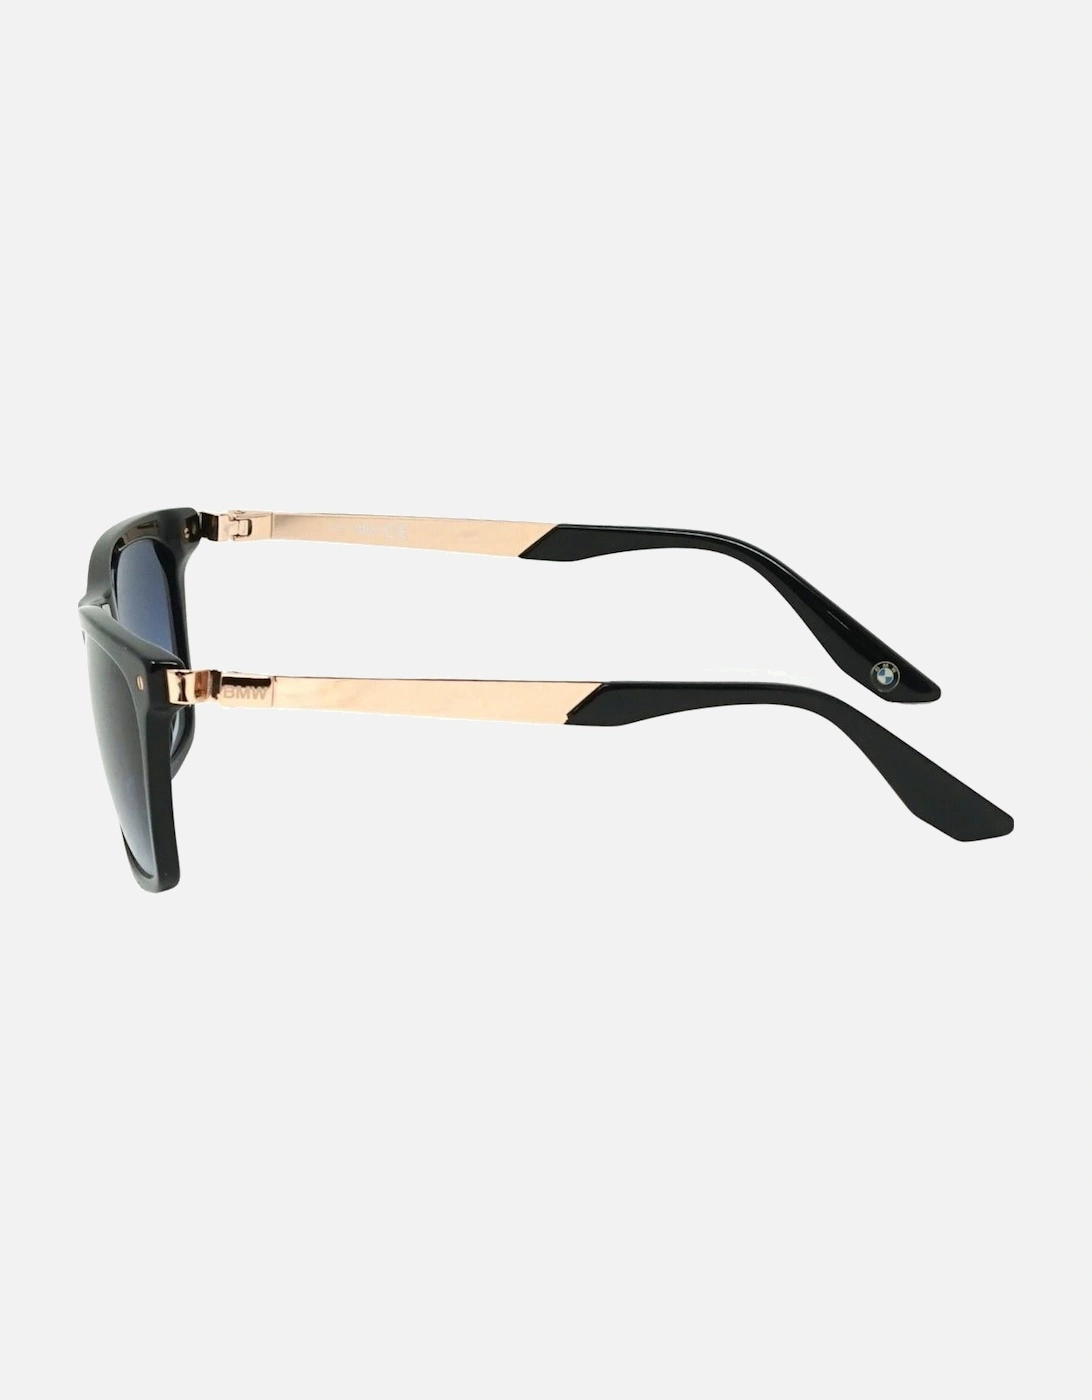 BW0002-H 01W Shiny Black Sunglasses